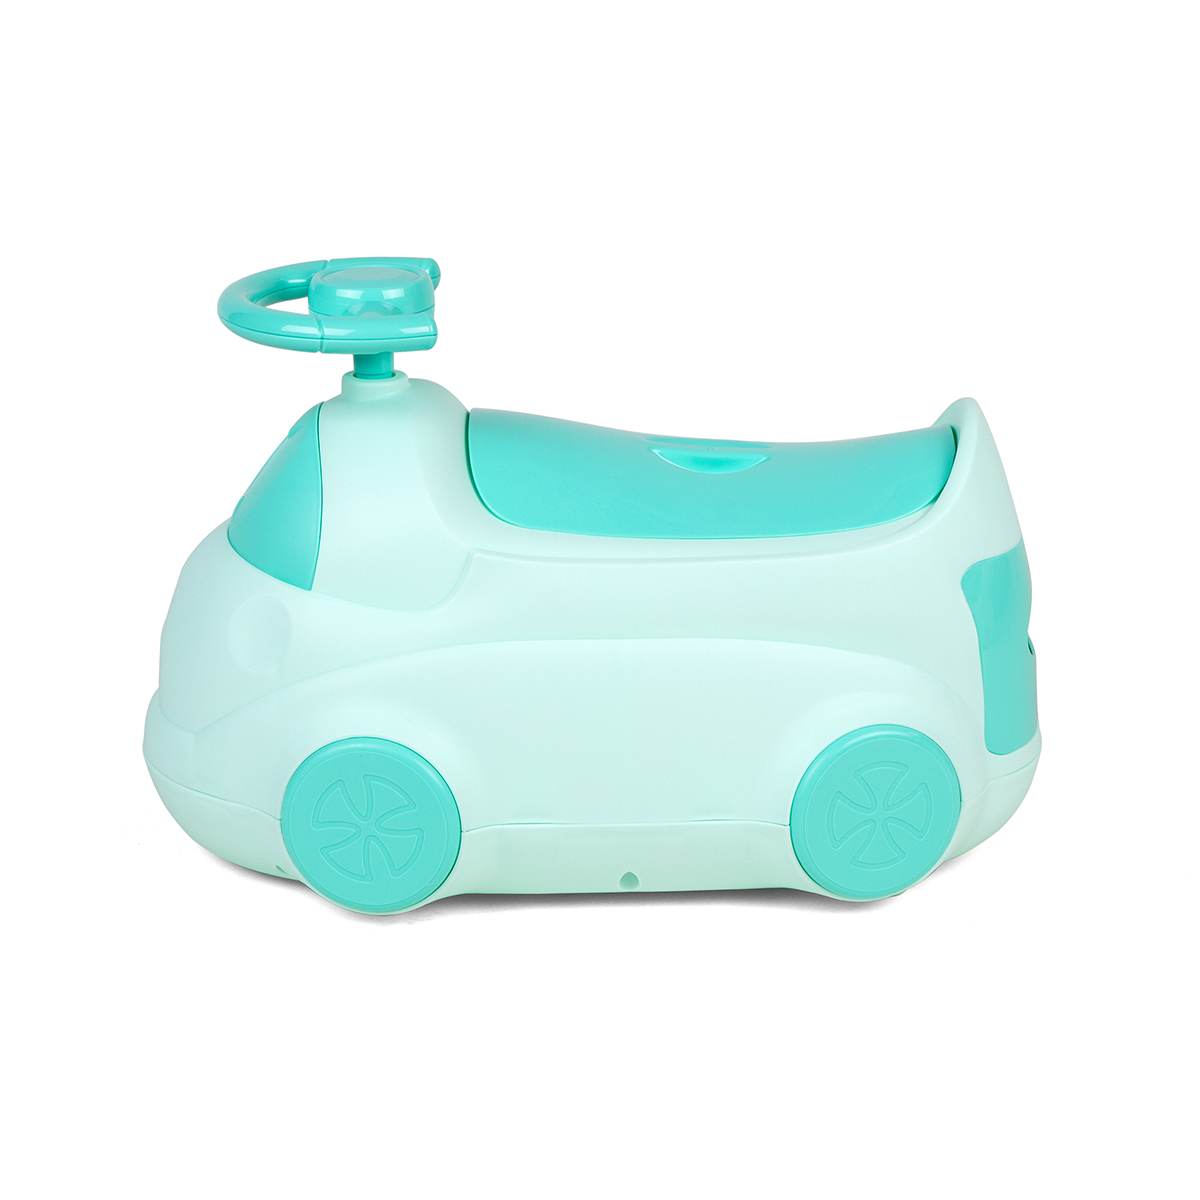 Car Design Baby Potty Chair